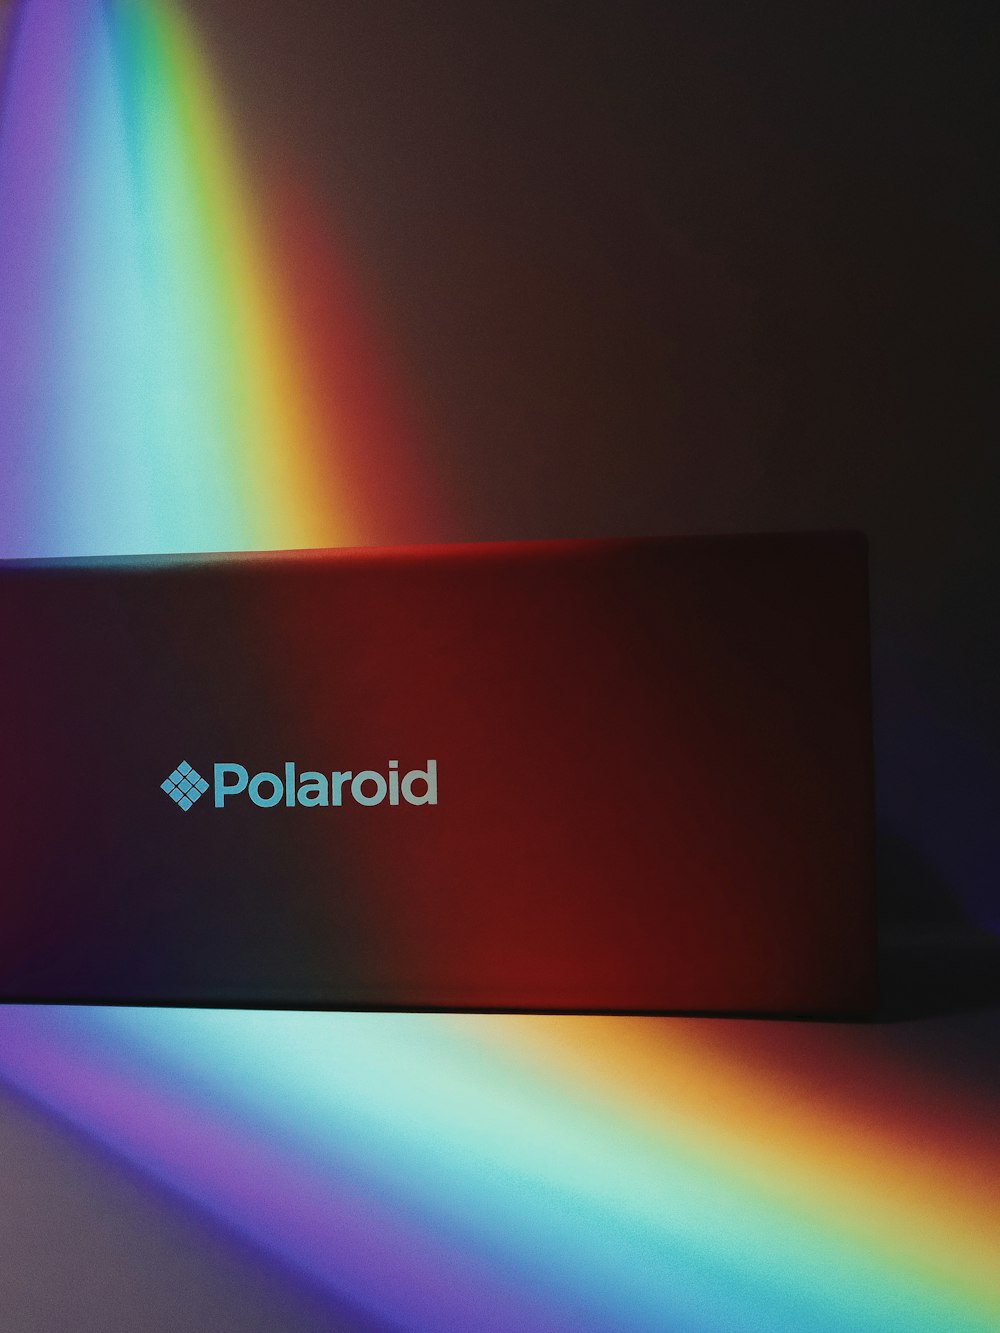 a polaroid projector sitting on a table